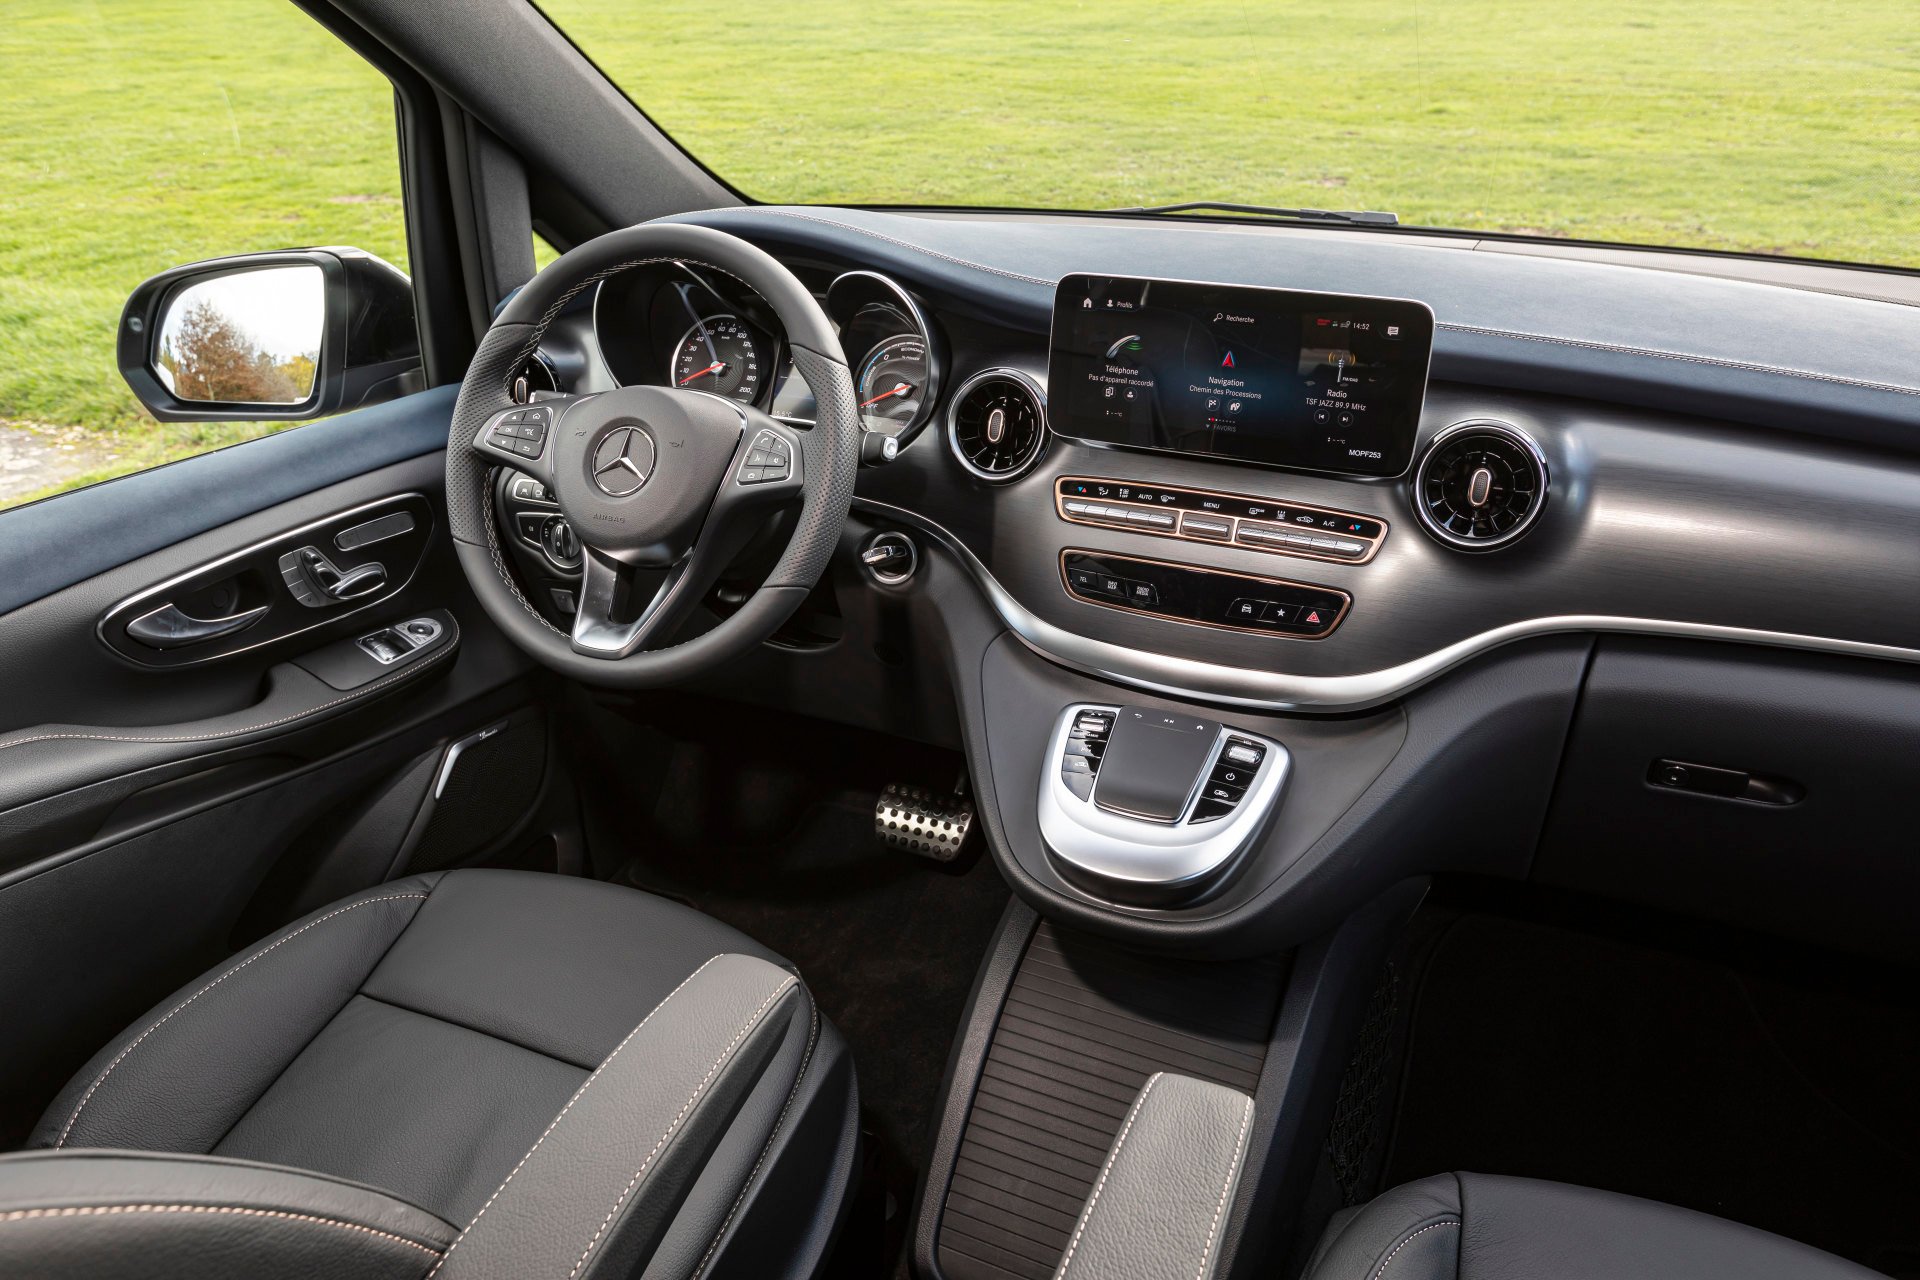 Mercedes-Benz Vito interior - Cockpit